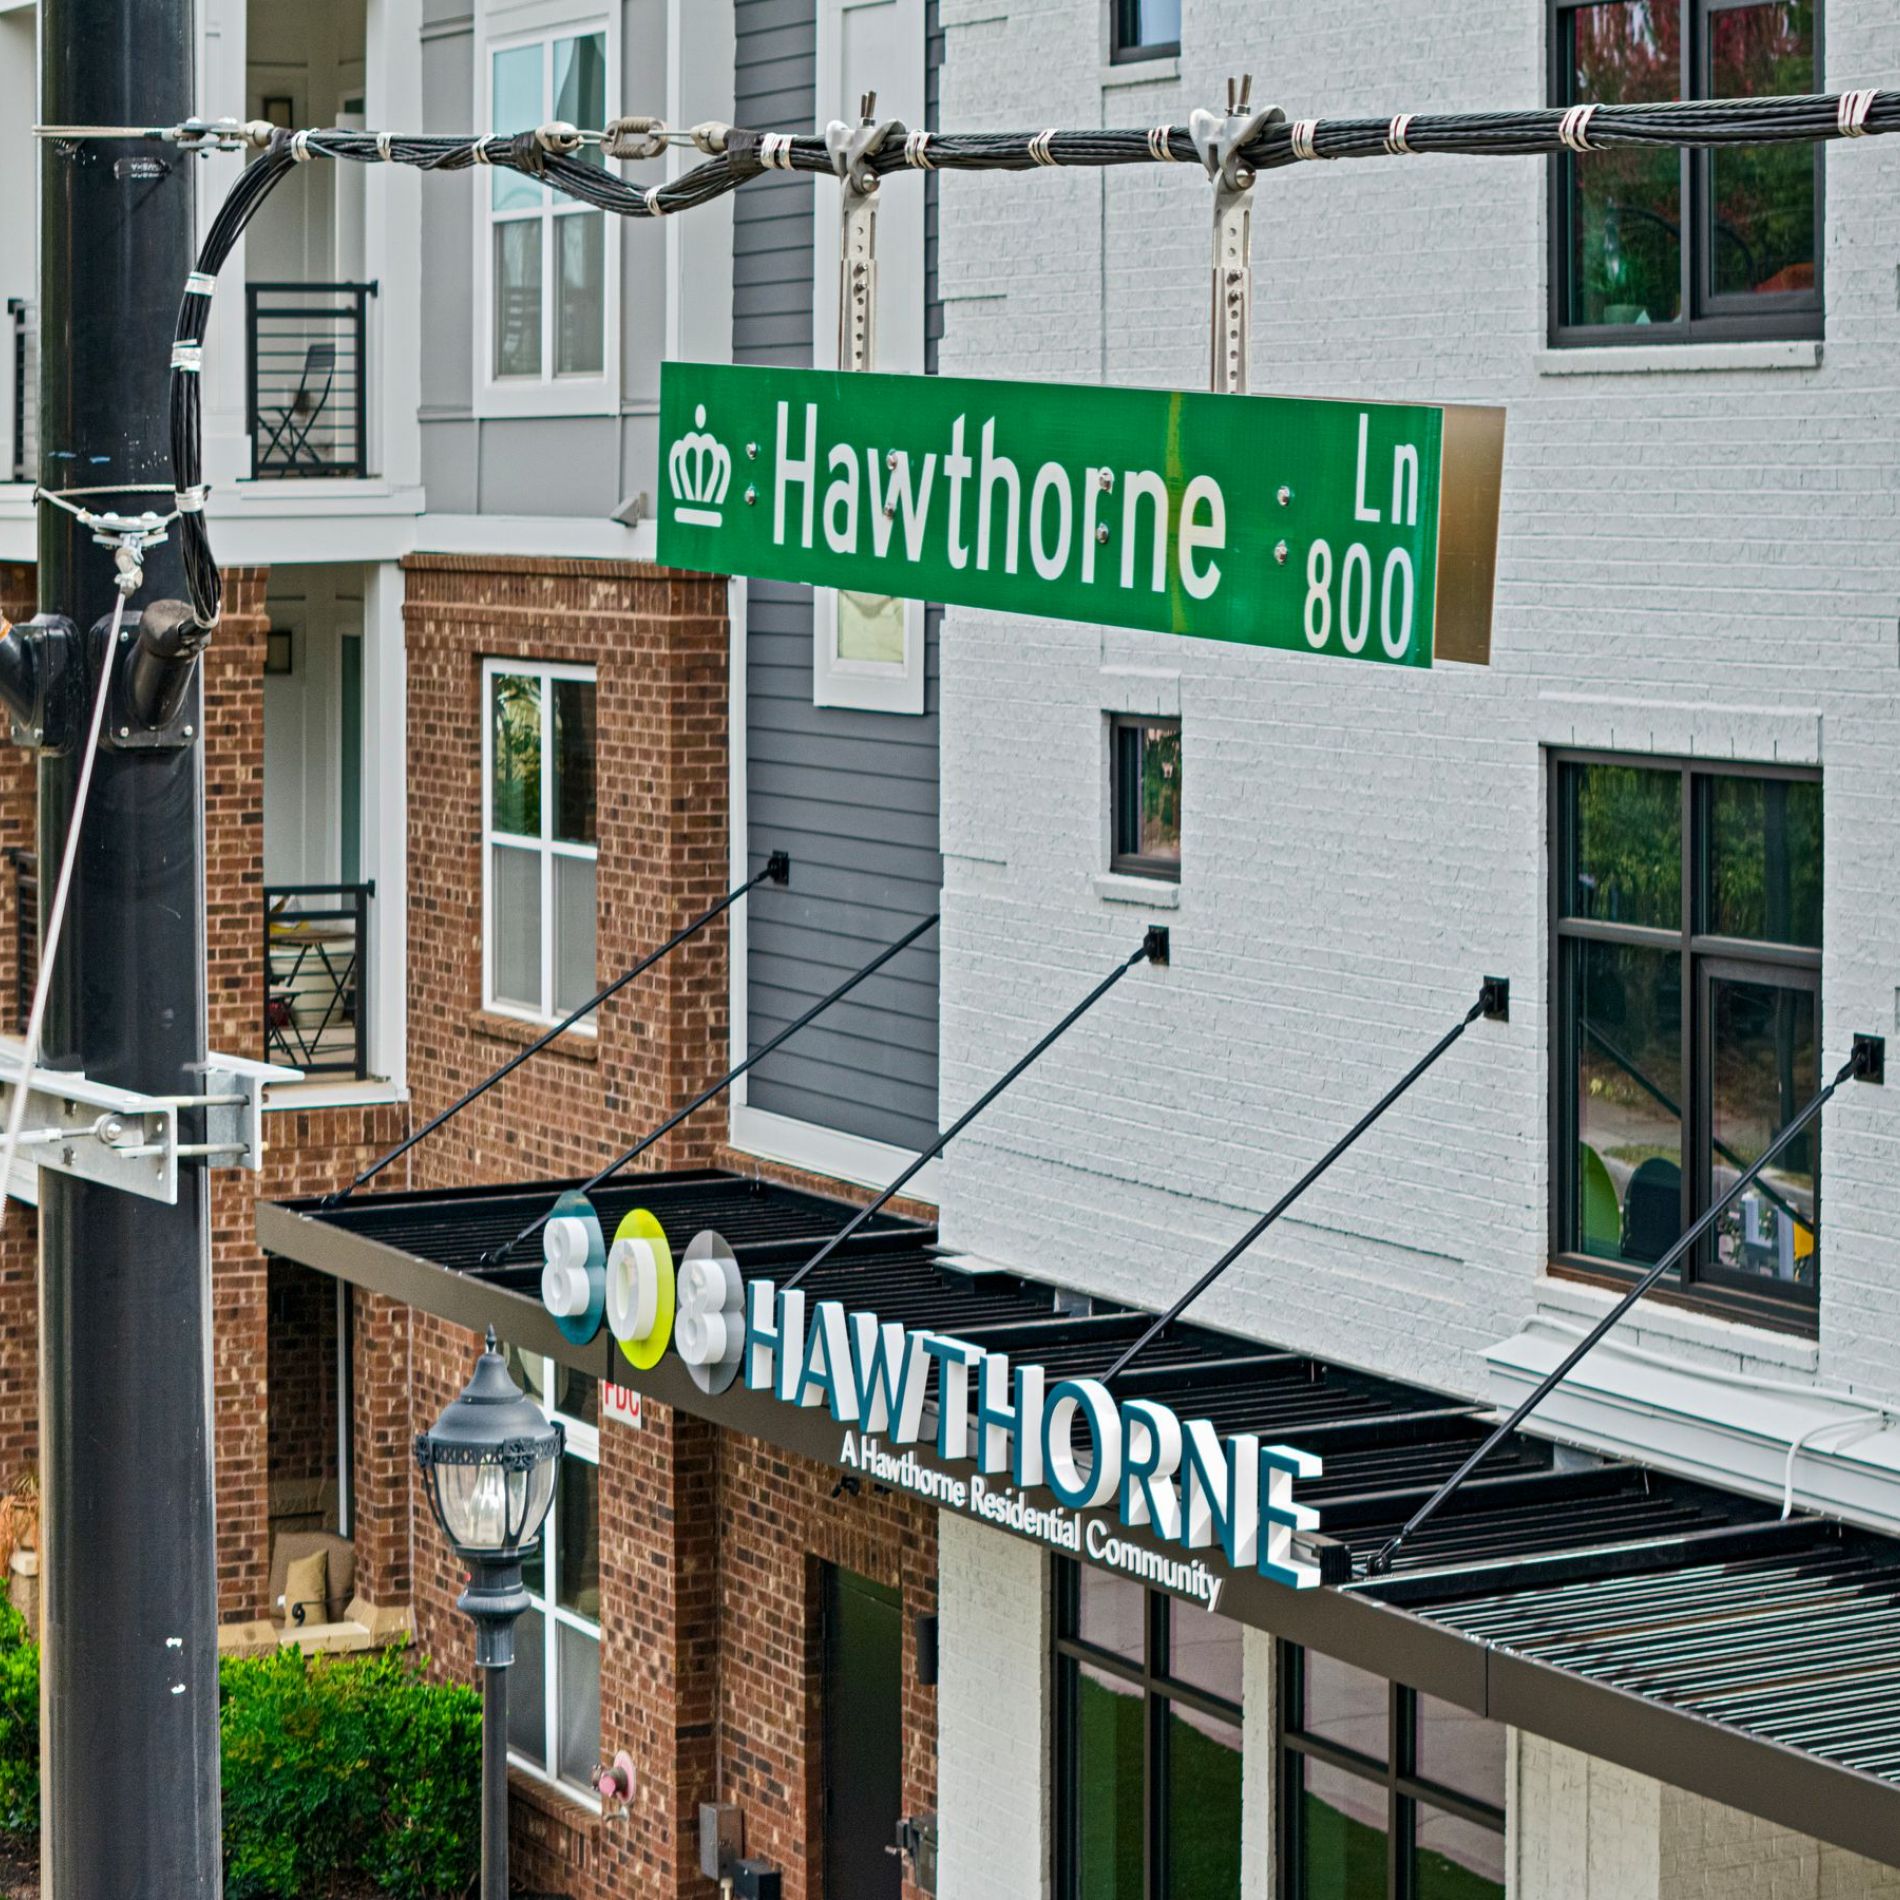 Hawthorne Lane street sign outside 808 Hawthorne apartment building